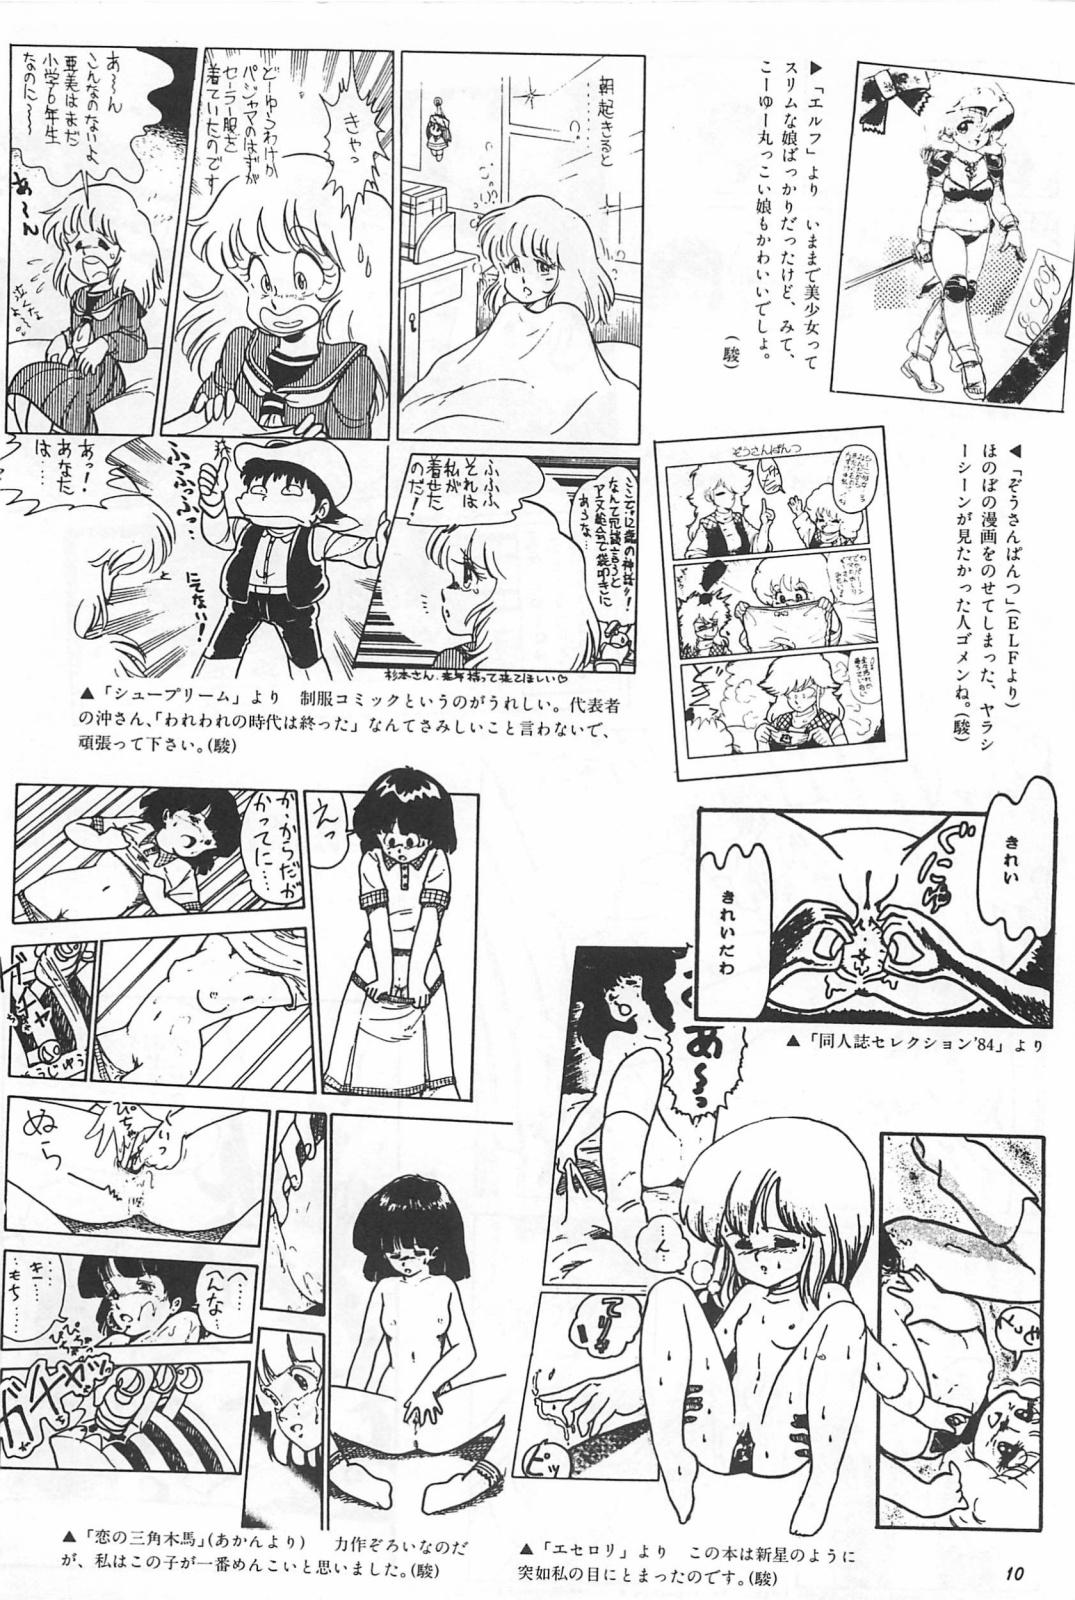 Trans Bishoujo Syndrome - Lolita syndrome - Urusei yatsura Voyeur - Page 12